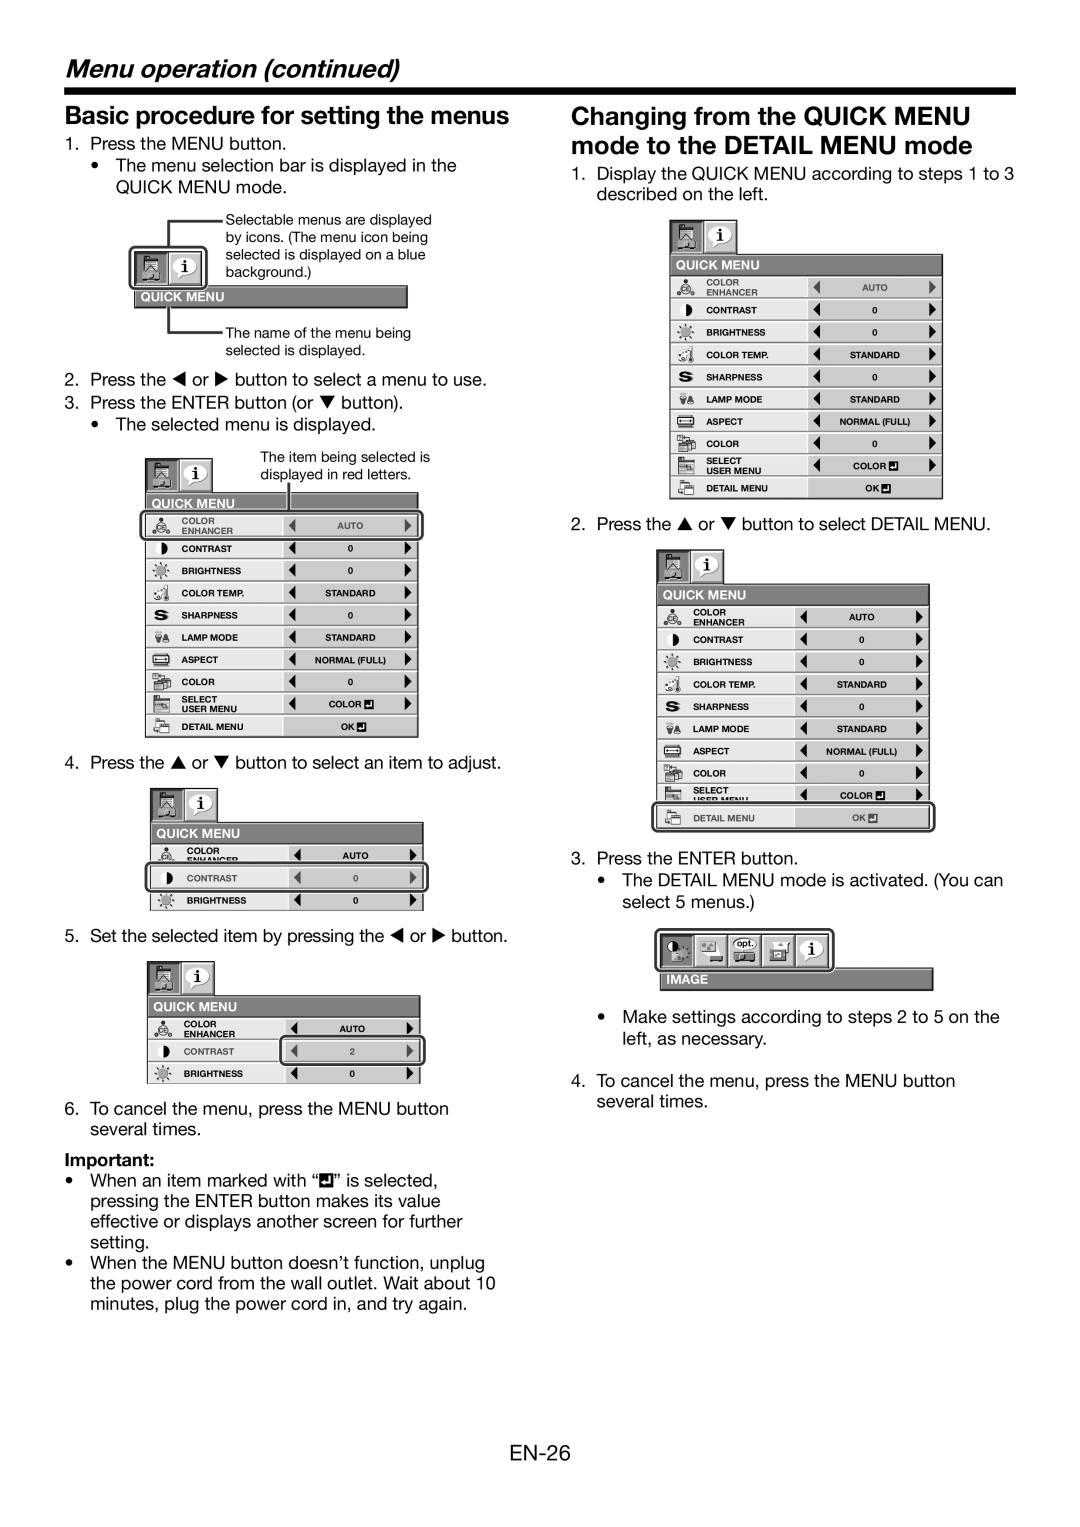 Mitsumi electronic WD3300U user manual Menu operation continued, Basic procedure for setting the menus 